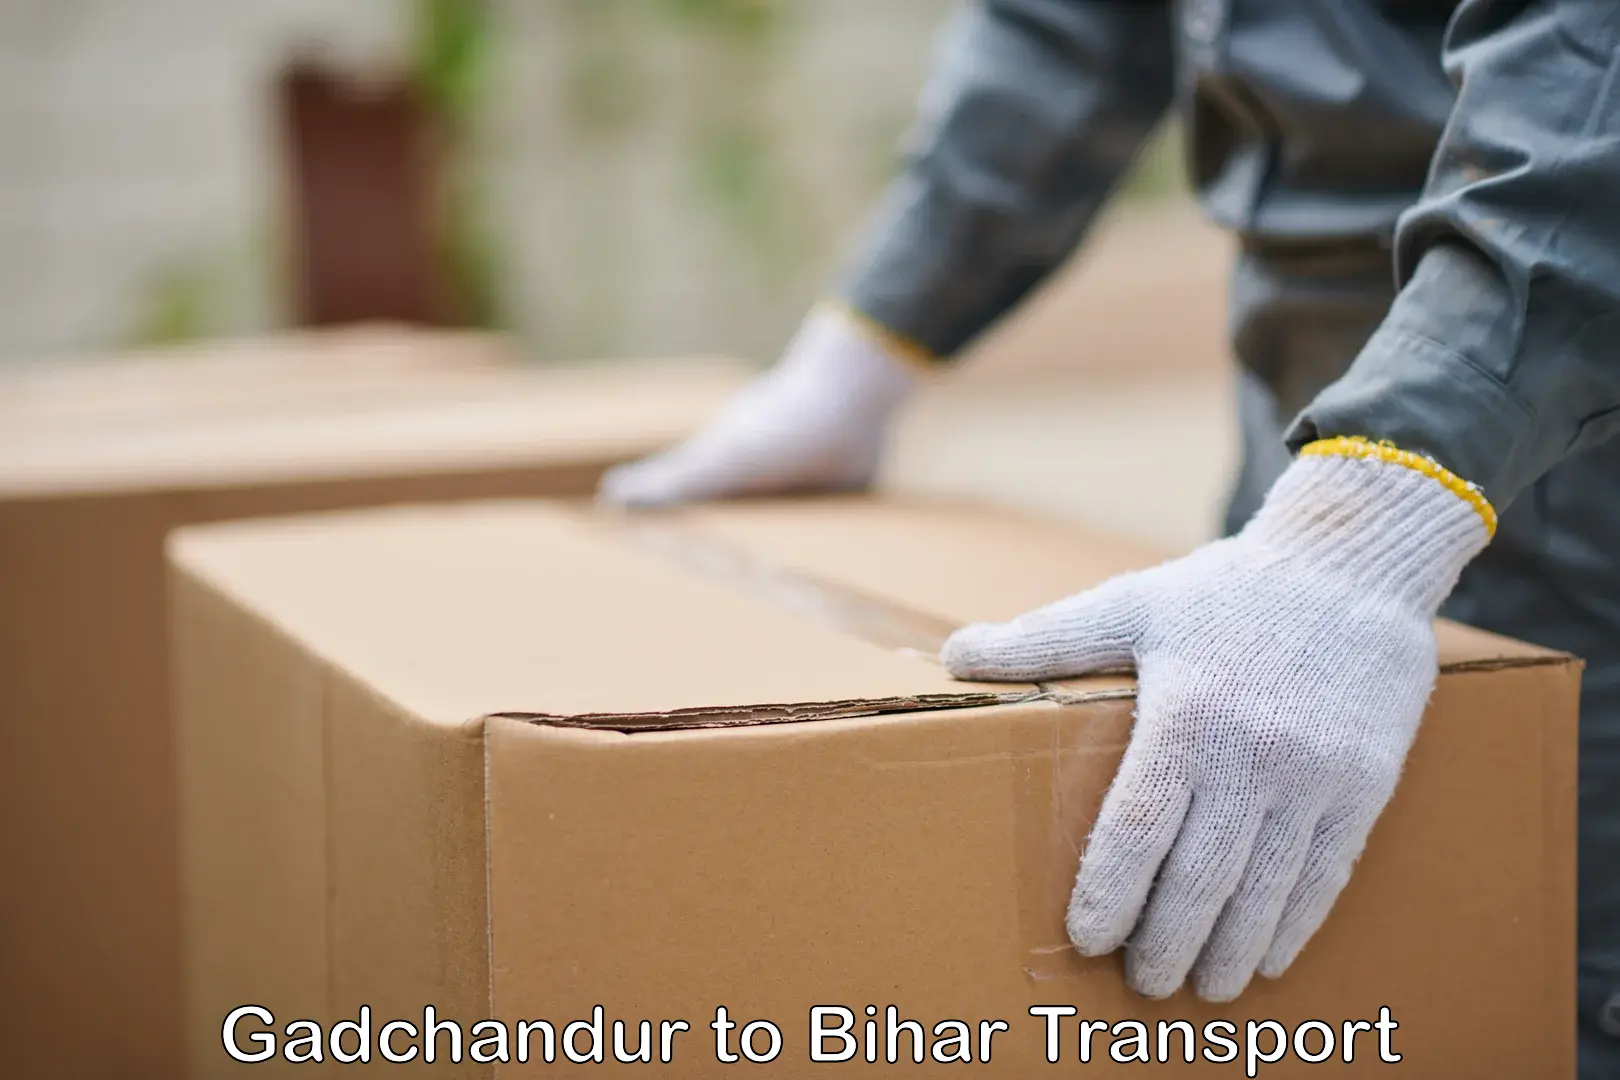 Sending bike to another city Gadchandur to Bihar